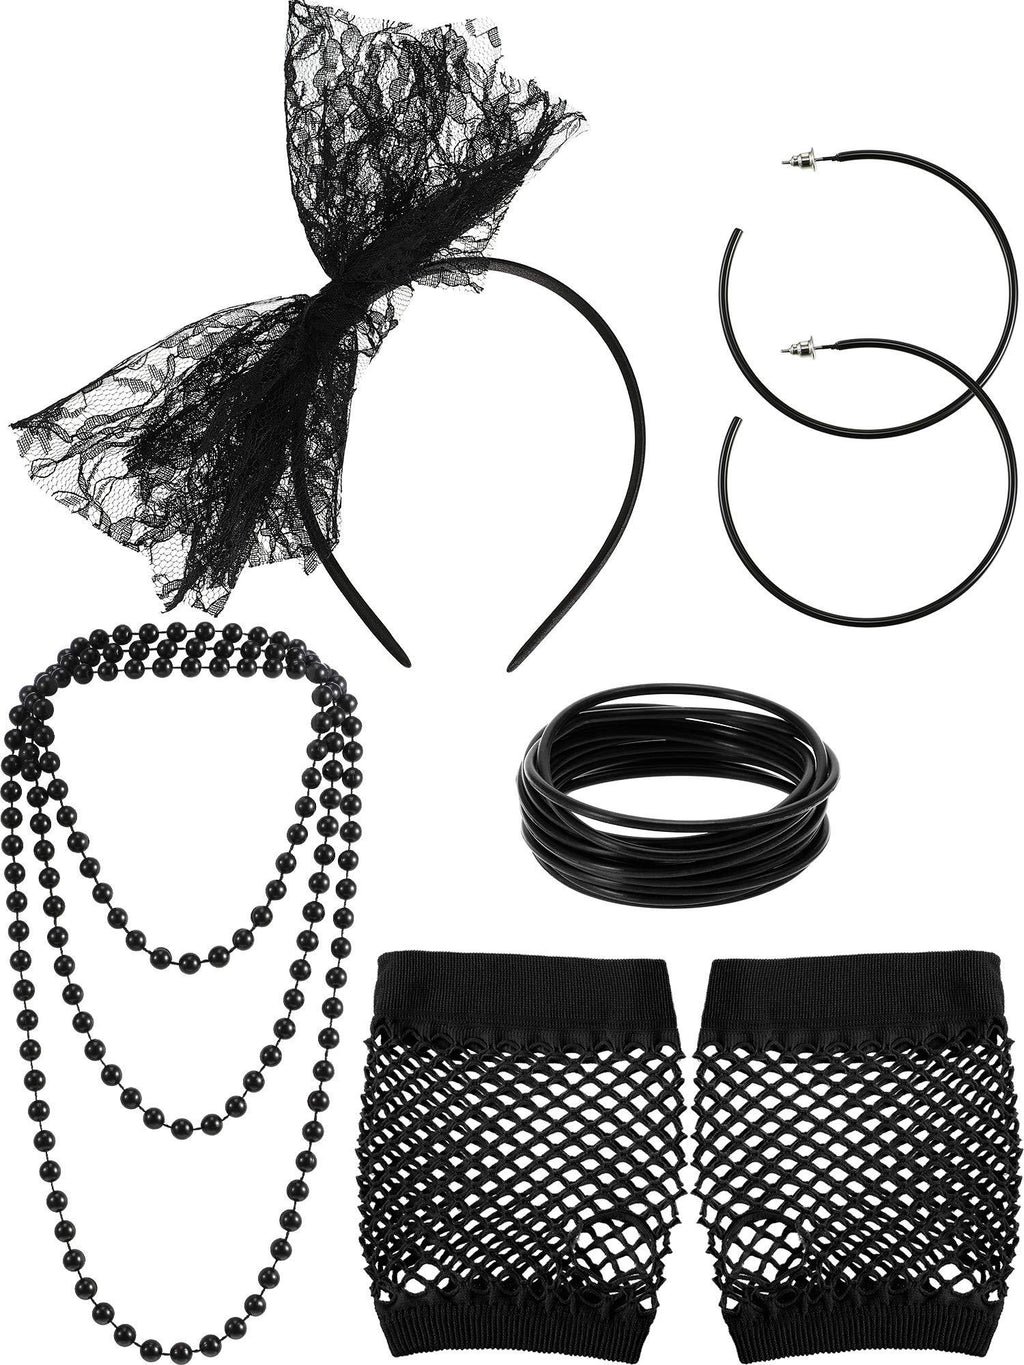 [Australia] - 80s Fancy Dress Costume Accessories Lace Headband Earrings Fishnet Gloves Necklace Bracelet for 80s Retro Party (Black) Black 